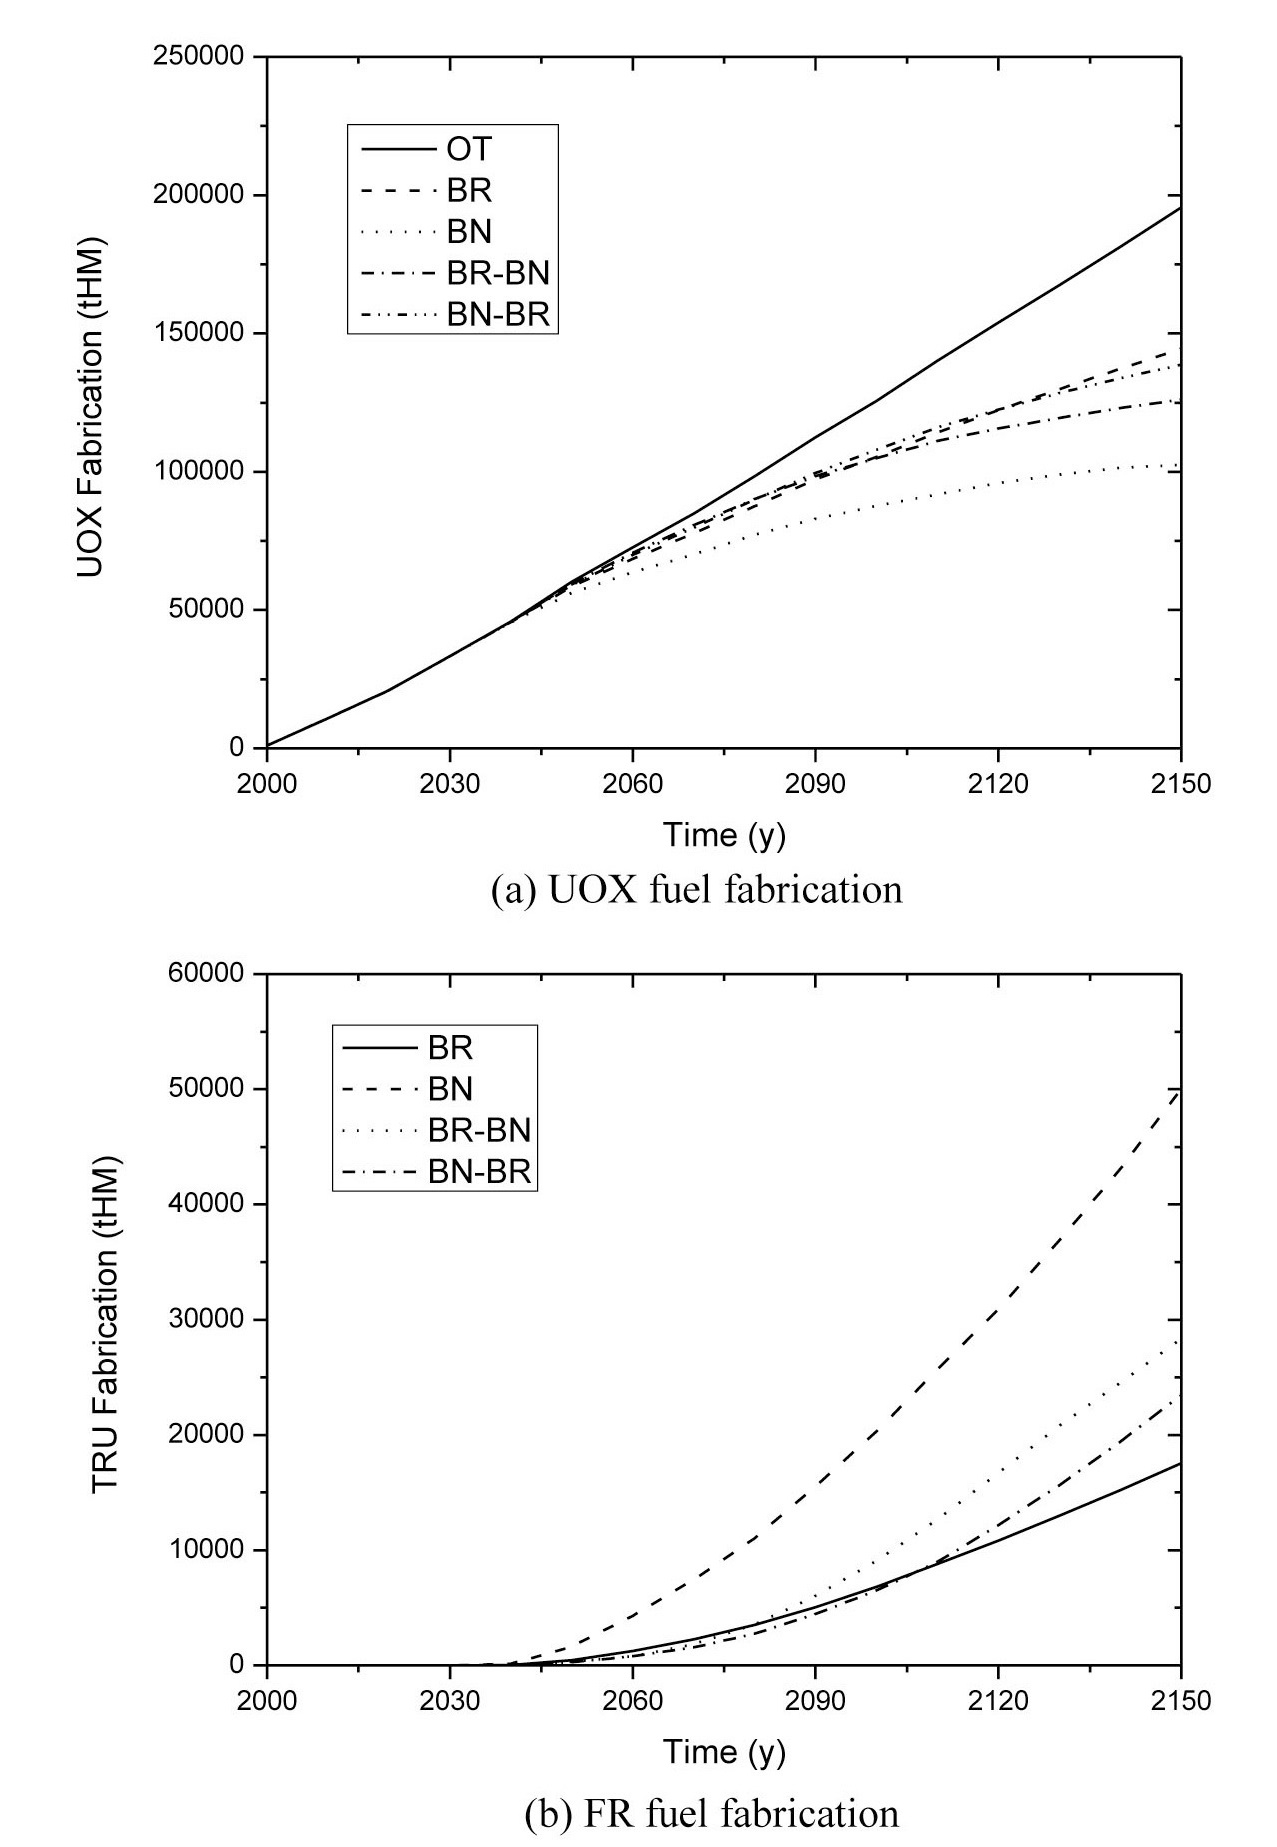 Comparison of Fuel Fabrication